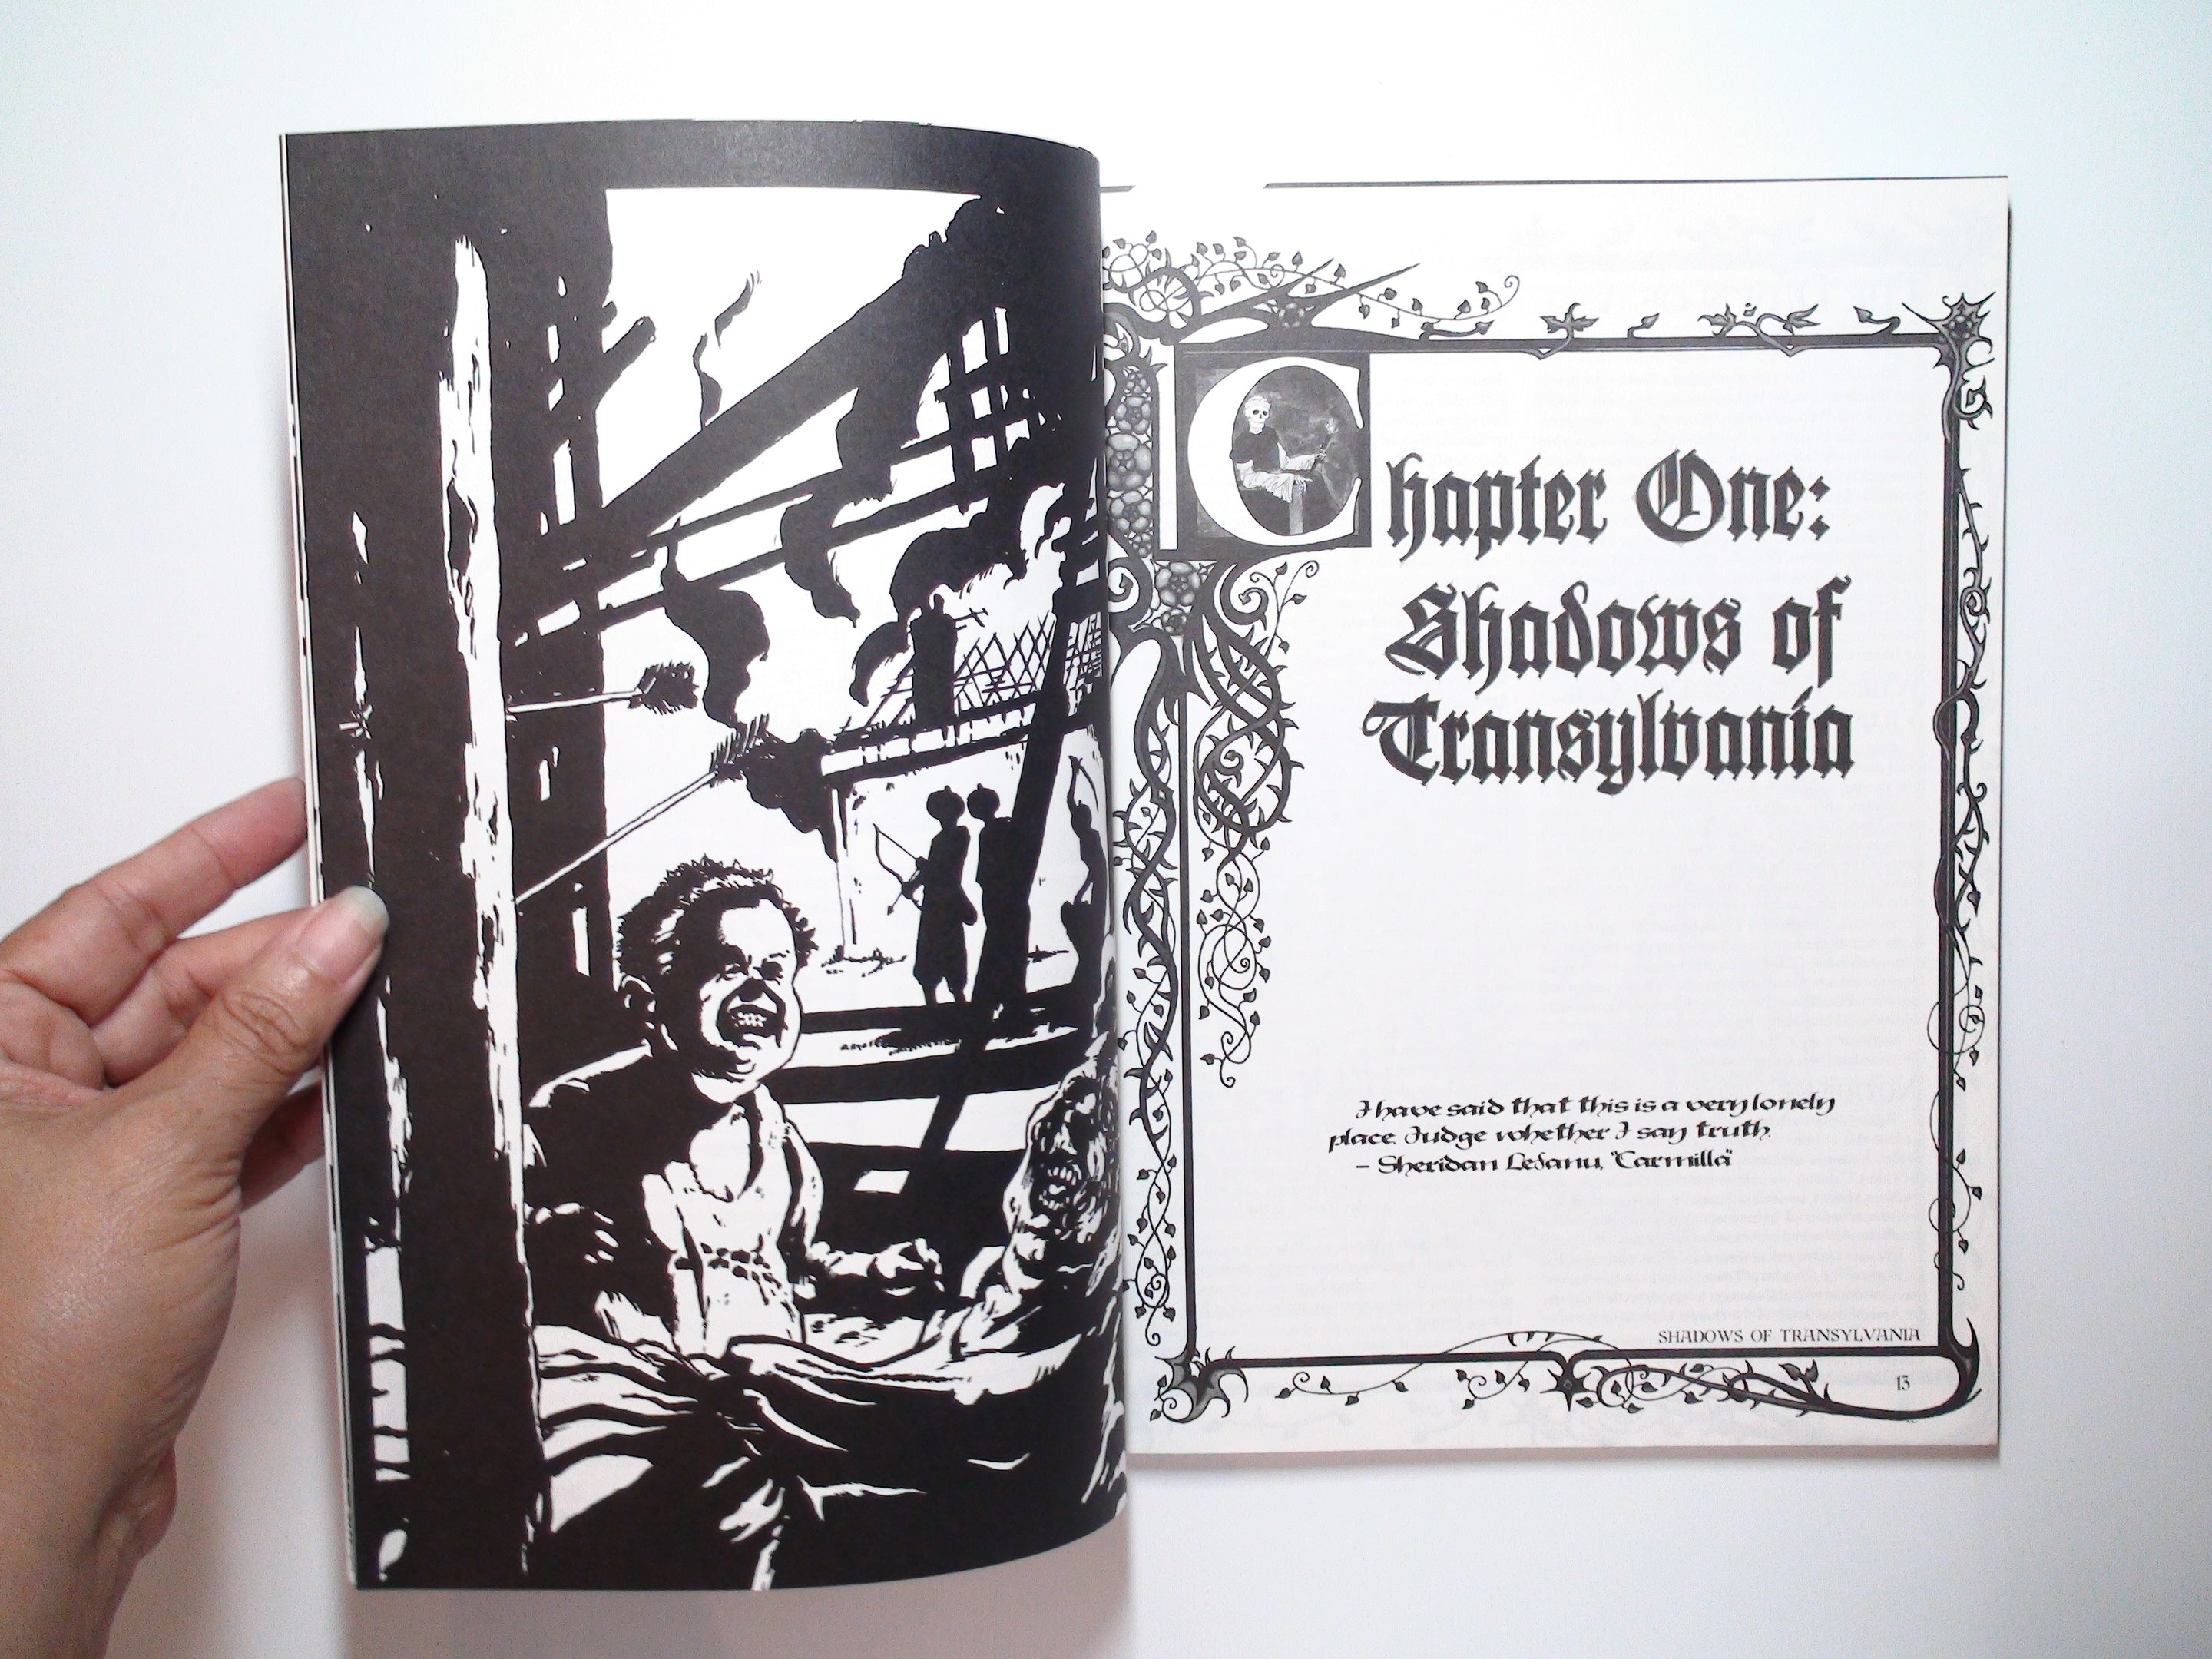 Transylvania Chronicles II, Son of the Dragon, Vampire, White Wolf, WW2812, 1998